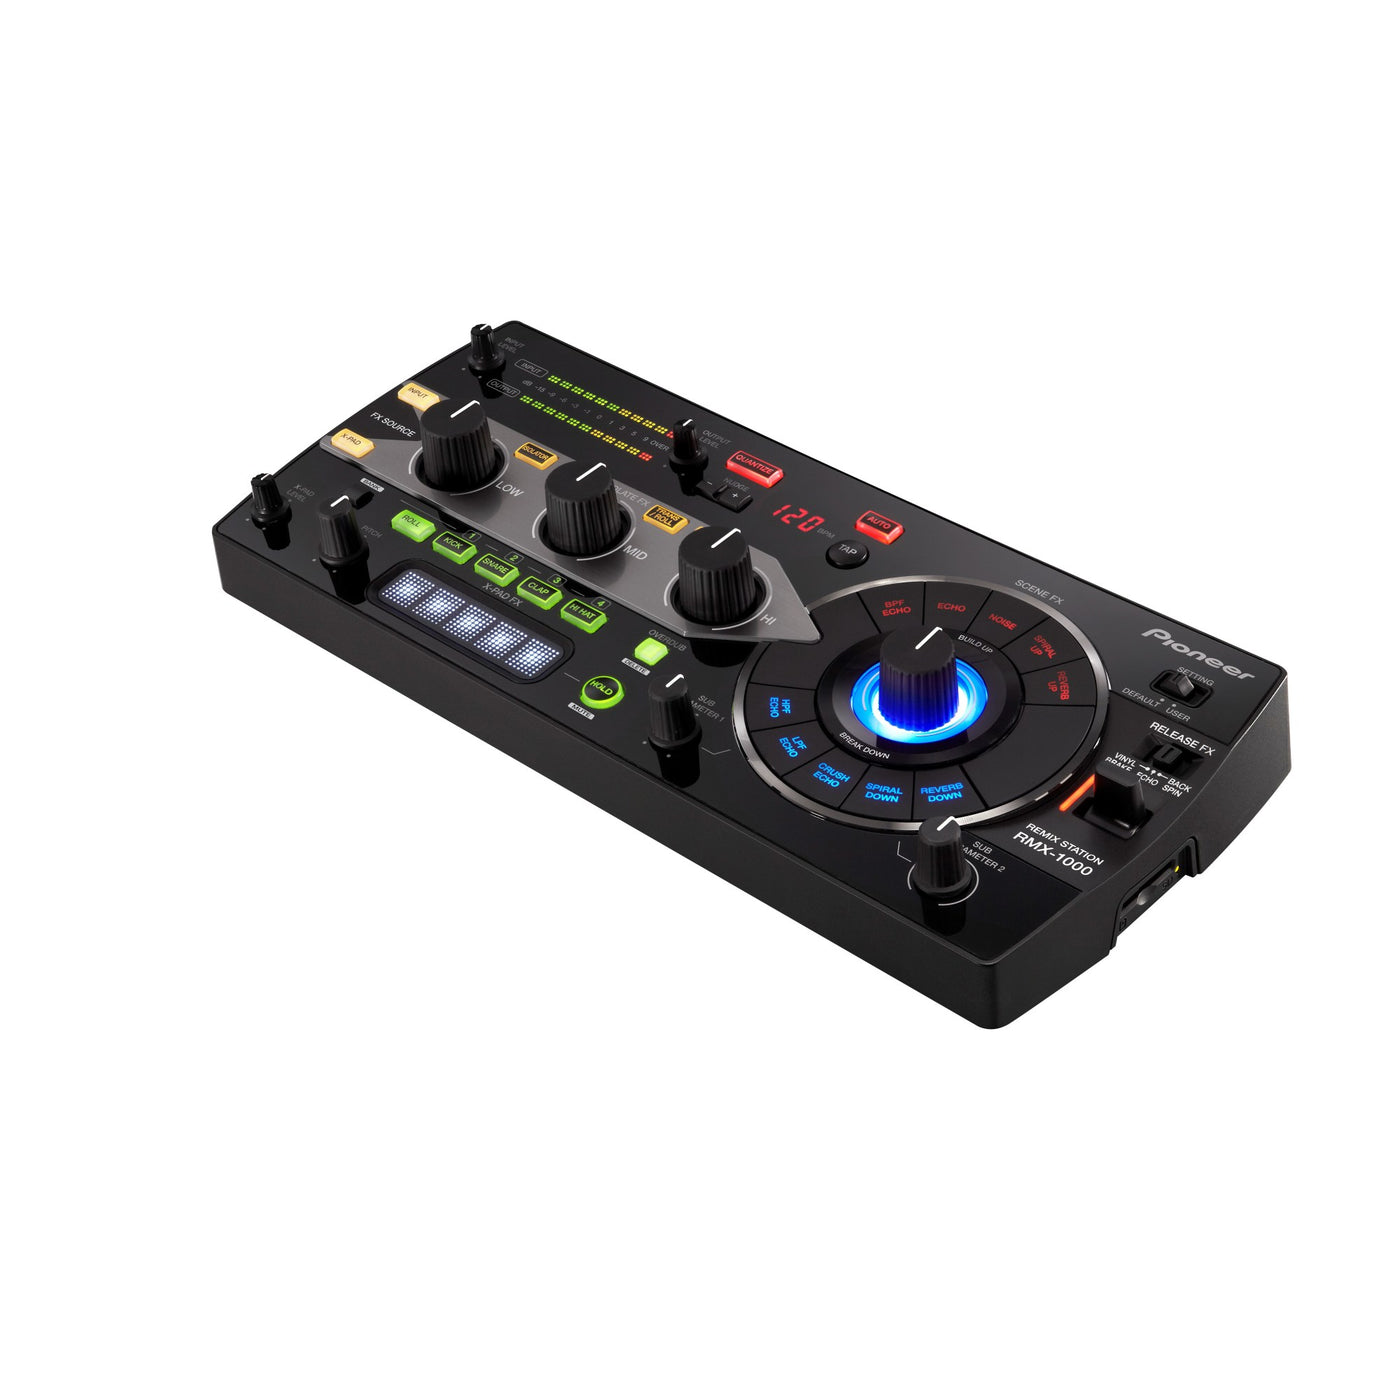 Pioneer DJ RMX-1000 3-in-1 Professional DJ Effector and Sampler, Professional Audio Equipment Effects Processor